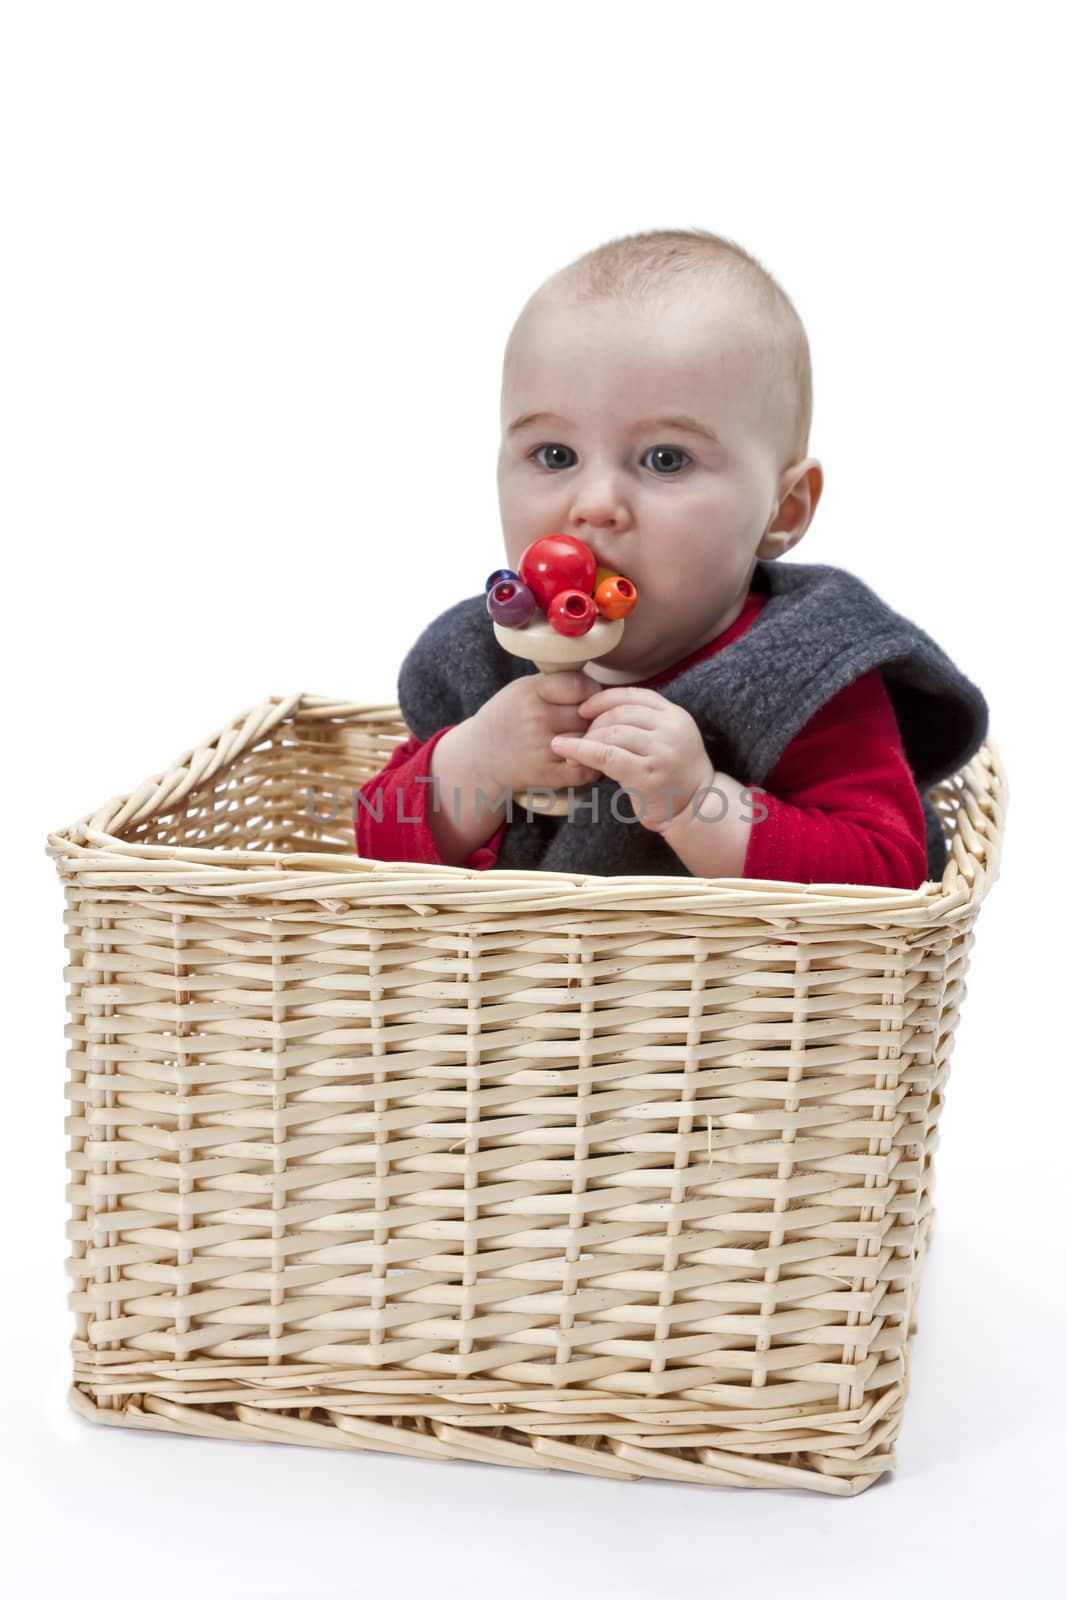 toddler in wickerbasket by gewoldi